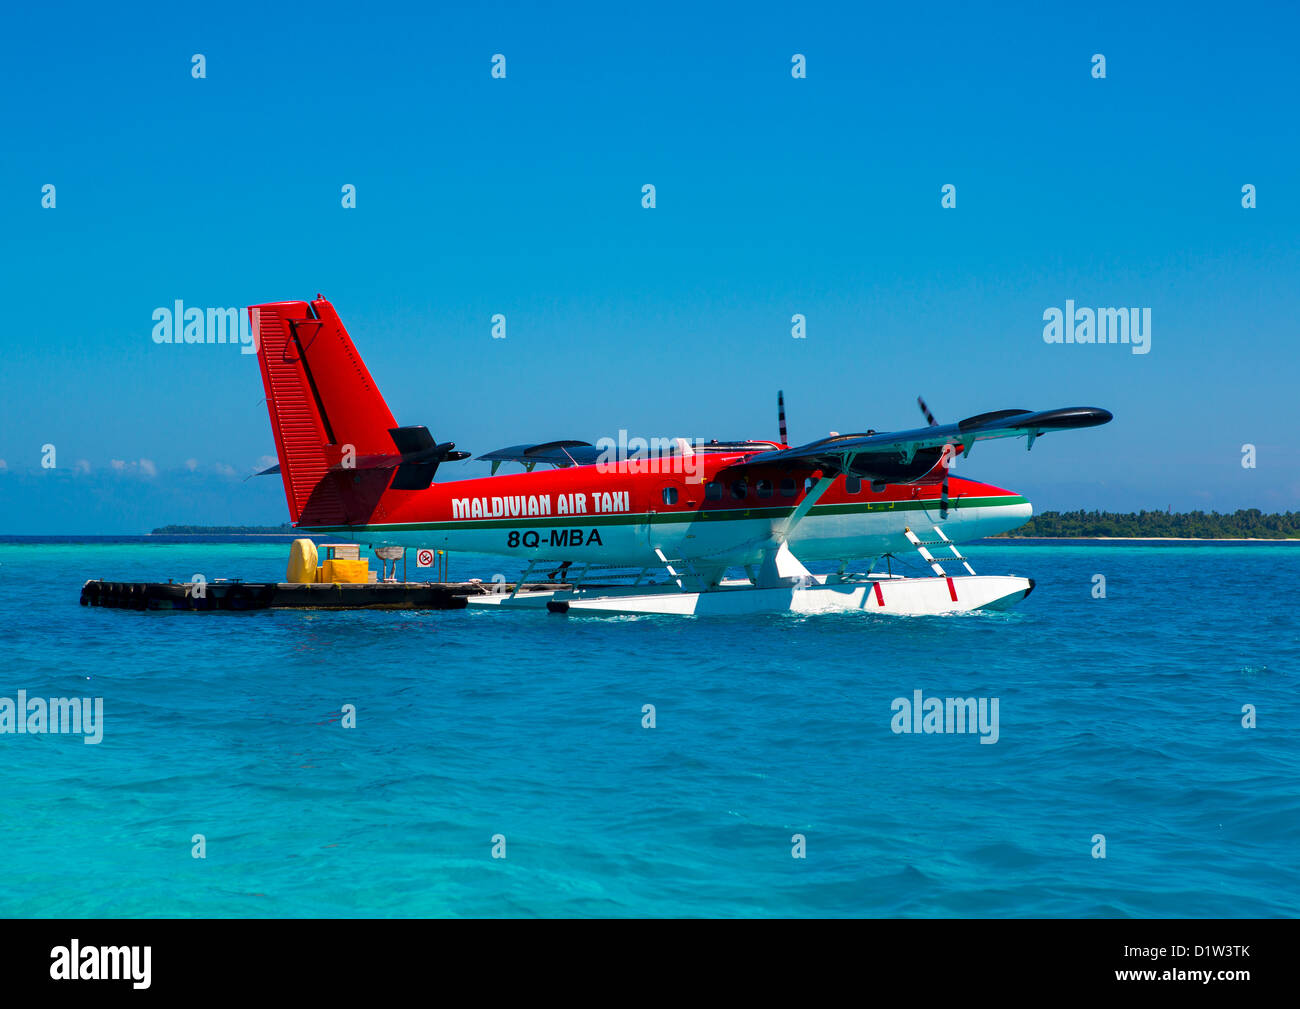 Maldivian Air Taxi Wasserflugzeug im Soneva Fushi Hotel Airport, Baa Atoll, Malediven Stockfoto